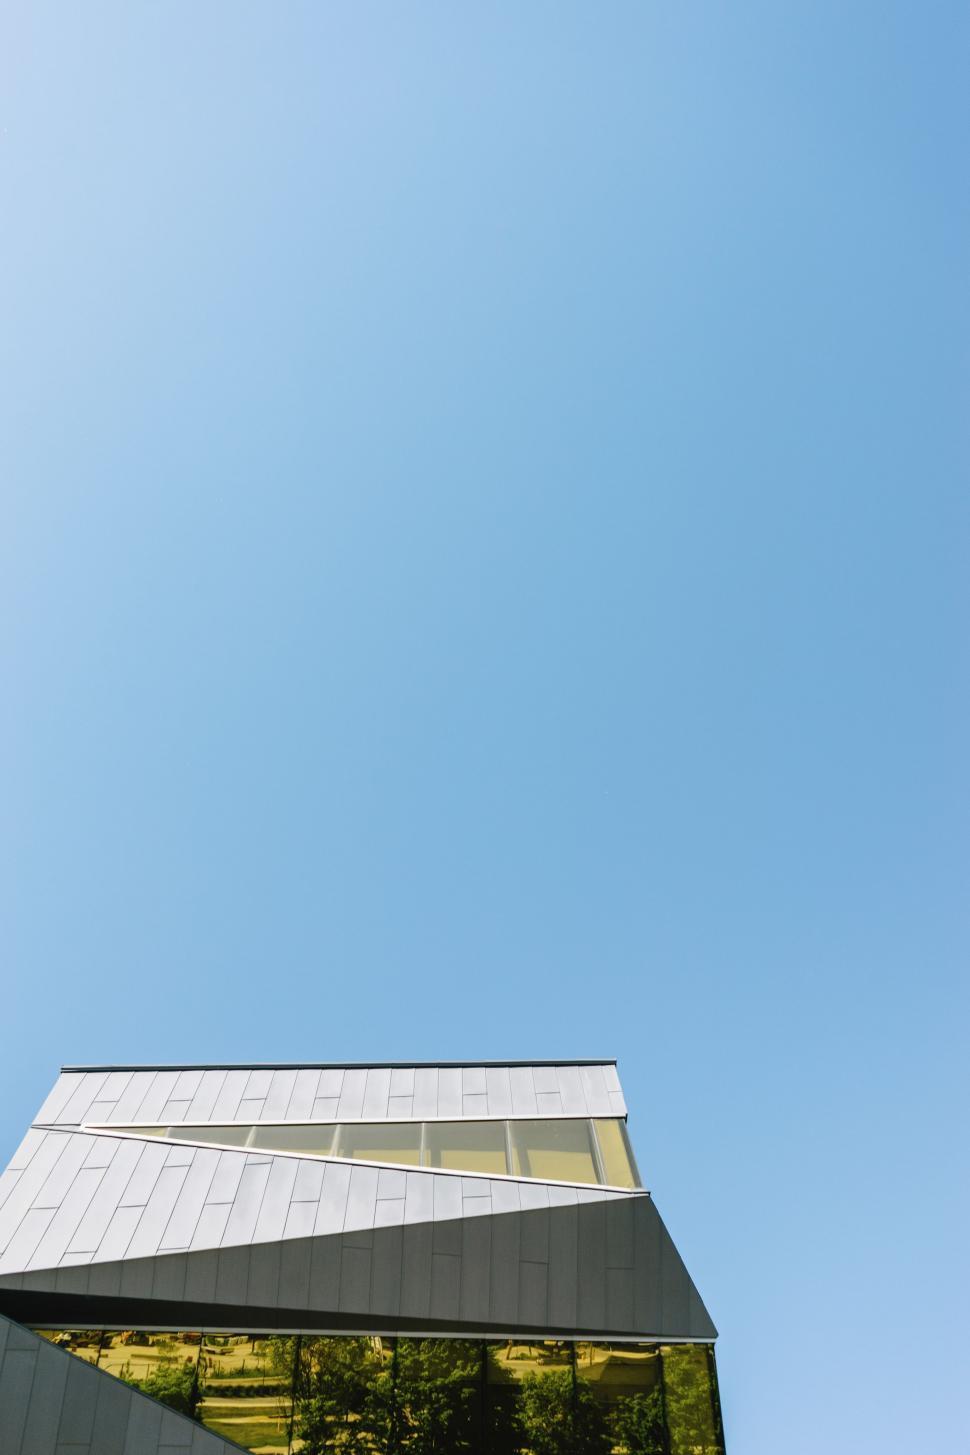 Free Image of Building Under Blue Sky 